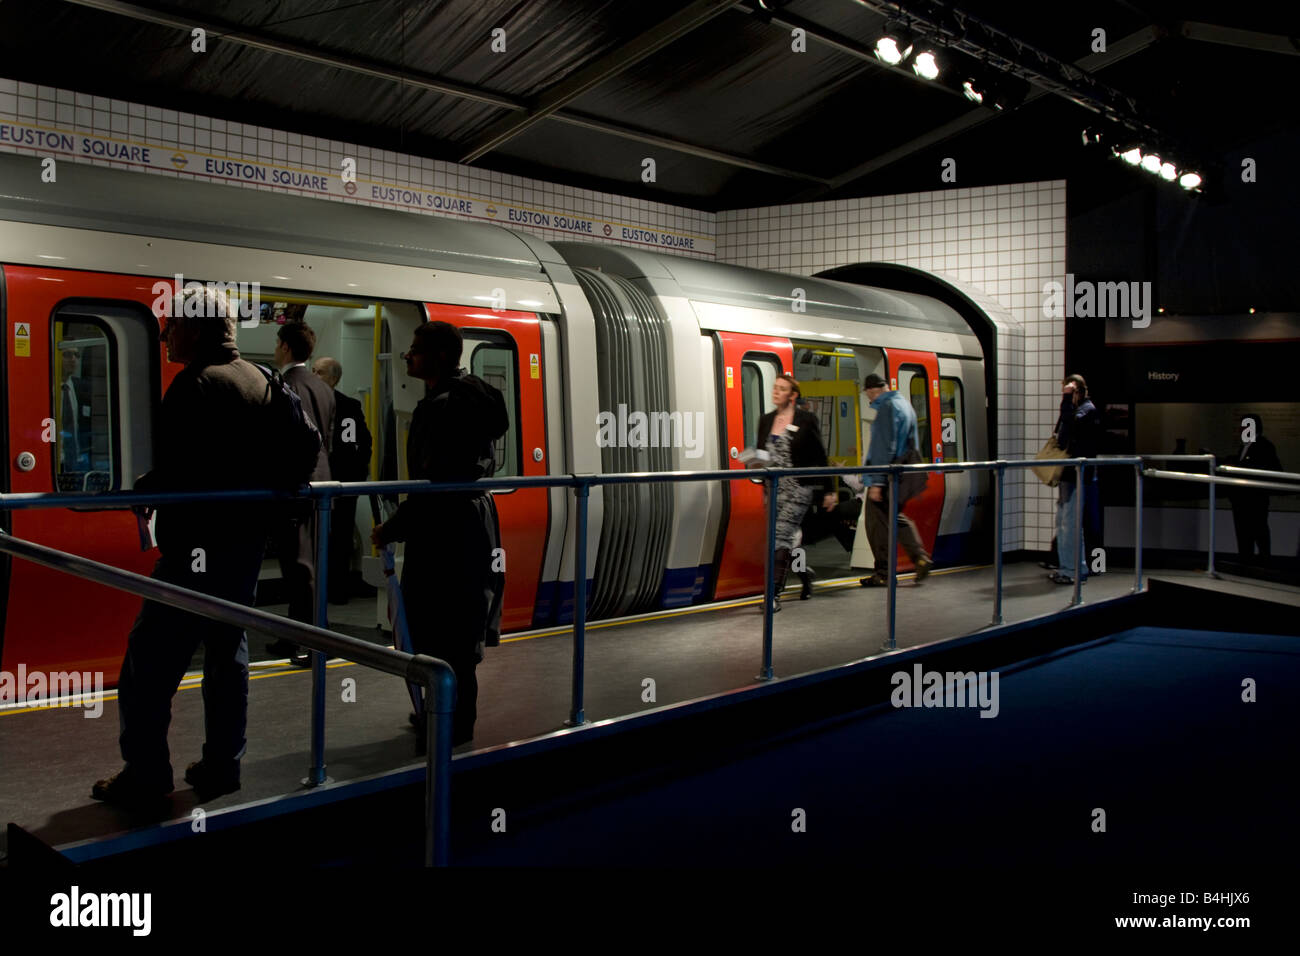 London Underground sub-surface S-Stock mock-up train on display Euston Gardens October 2008 Stock Photo